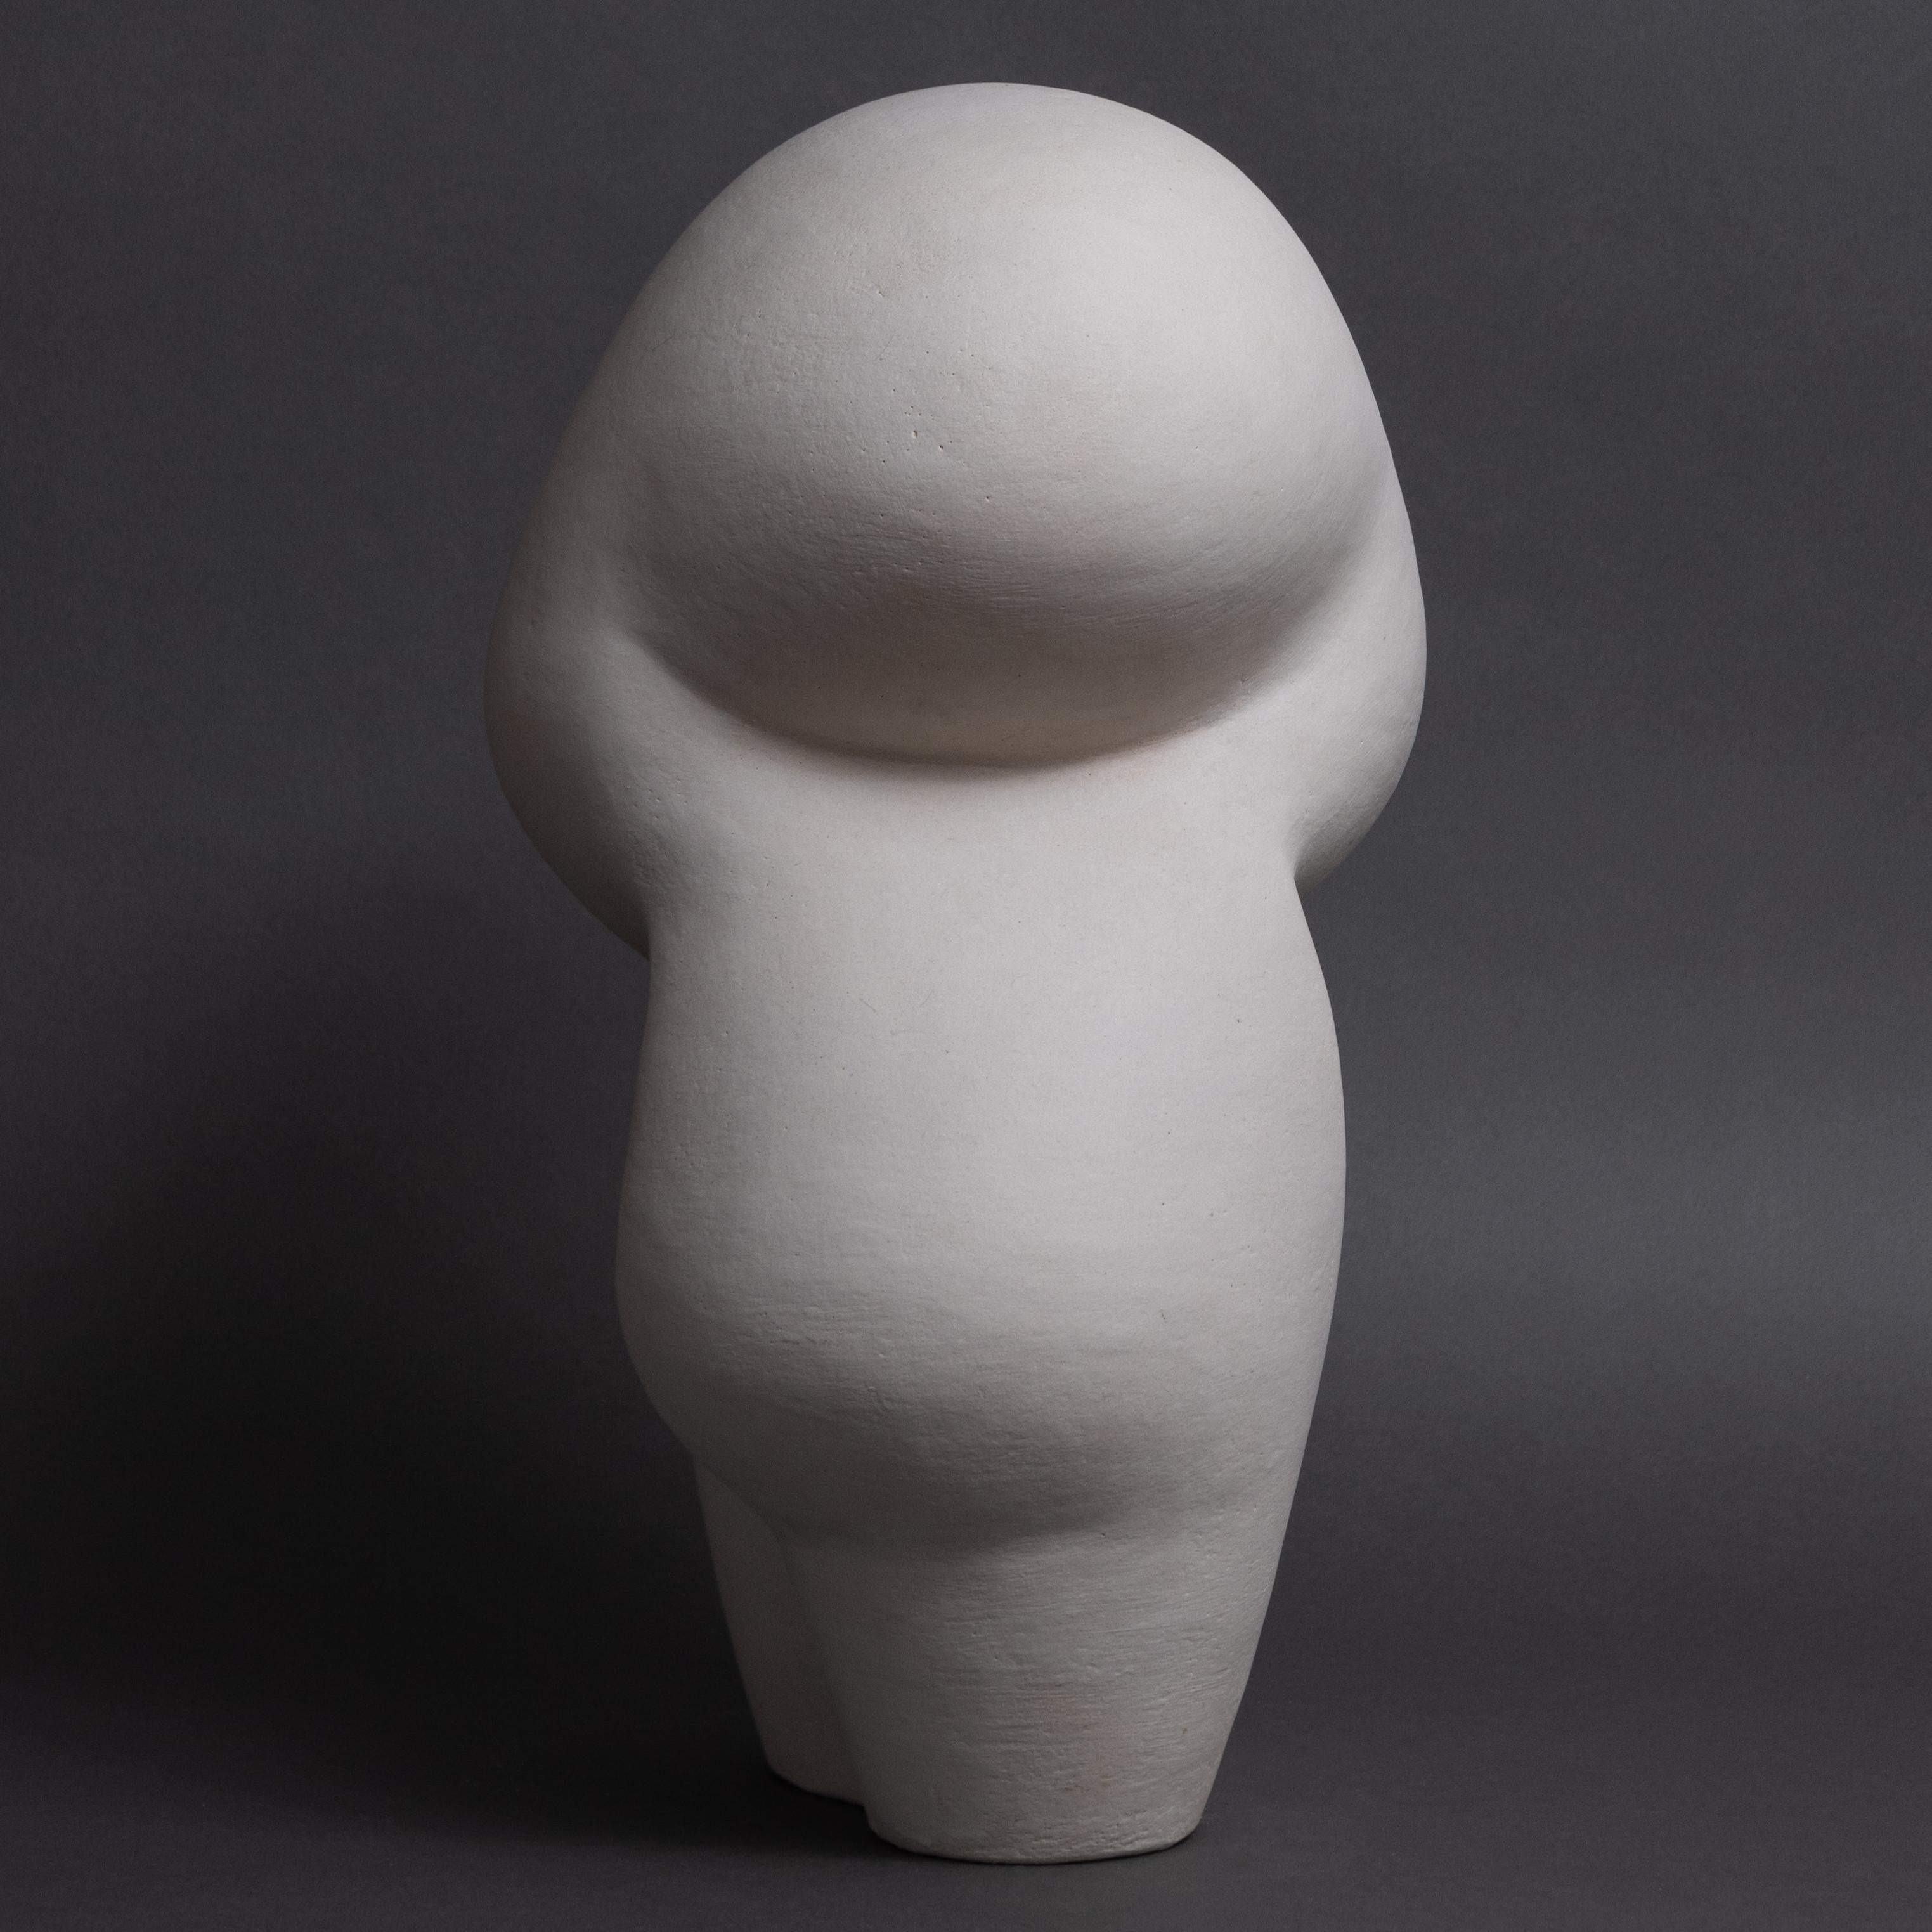 Suédois Abstract, Contemporary ceramic sculpture by Bo Arenander, In-stock en vente